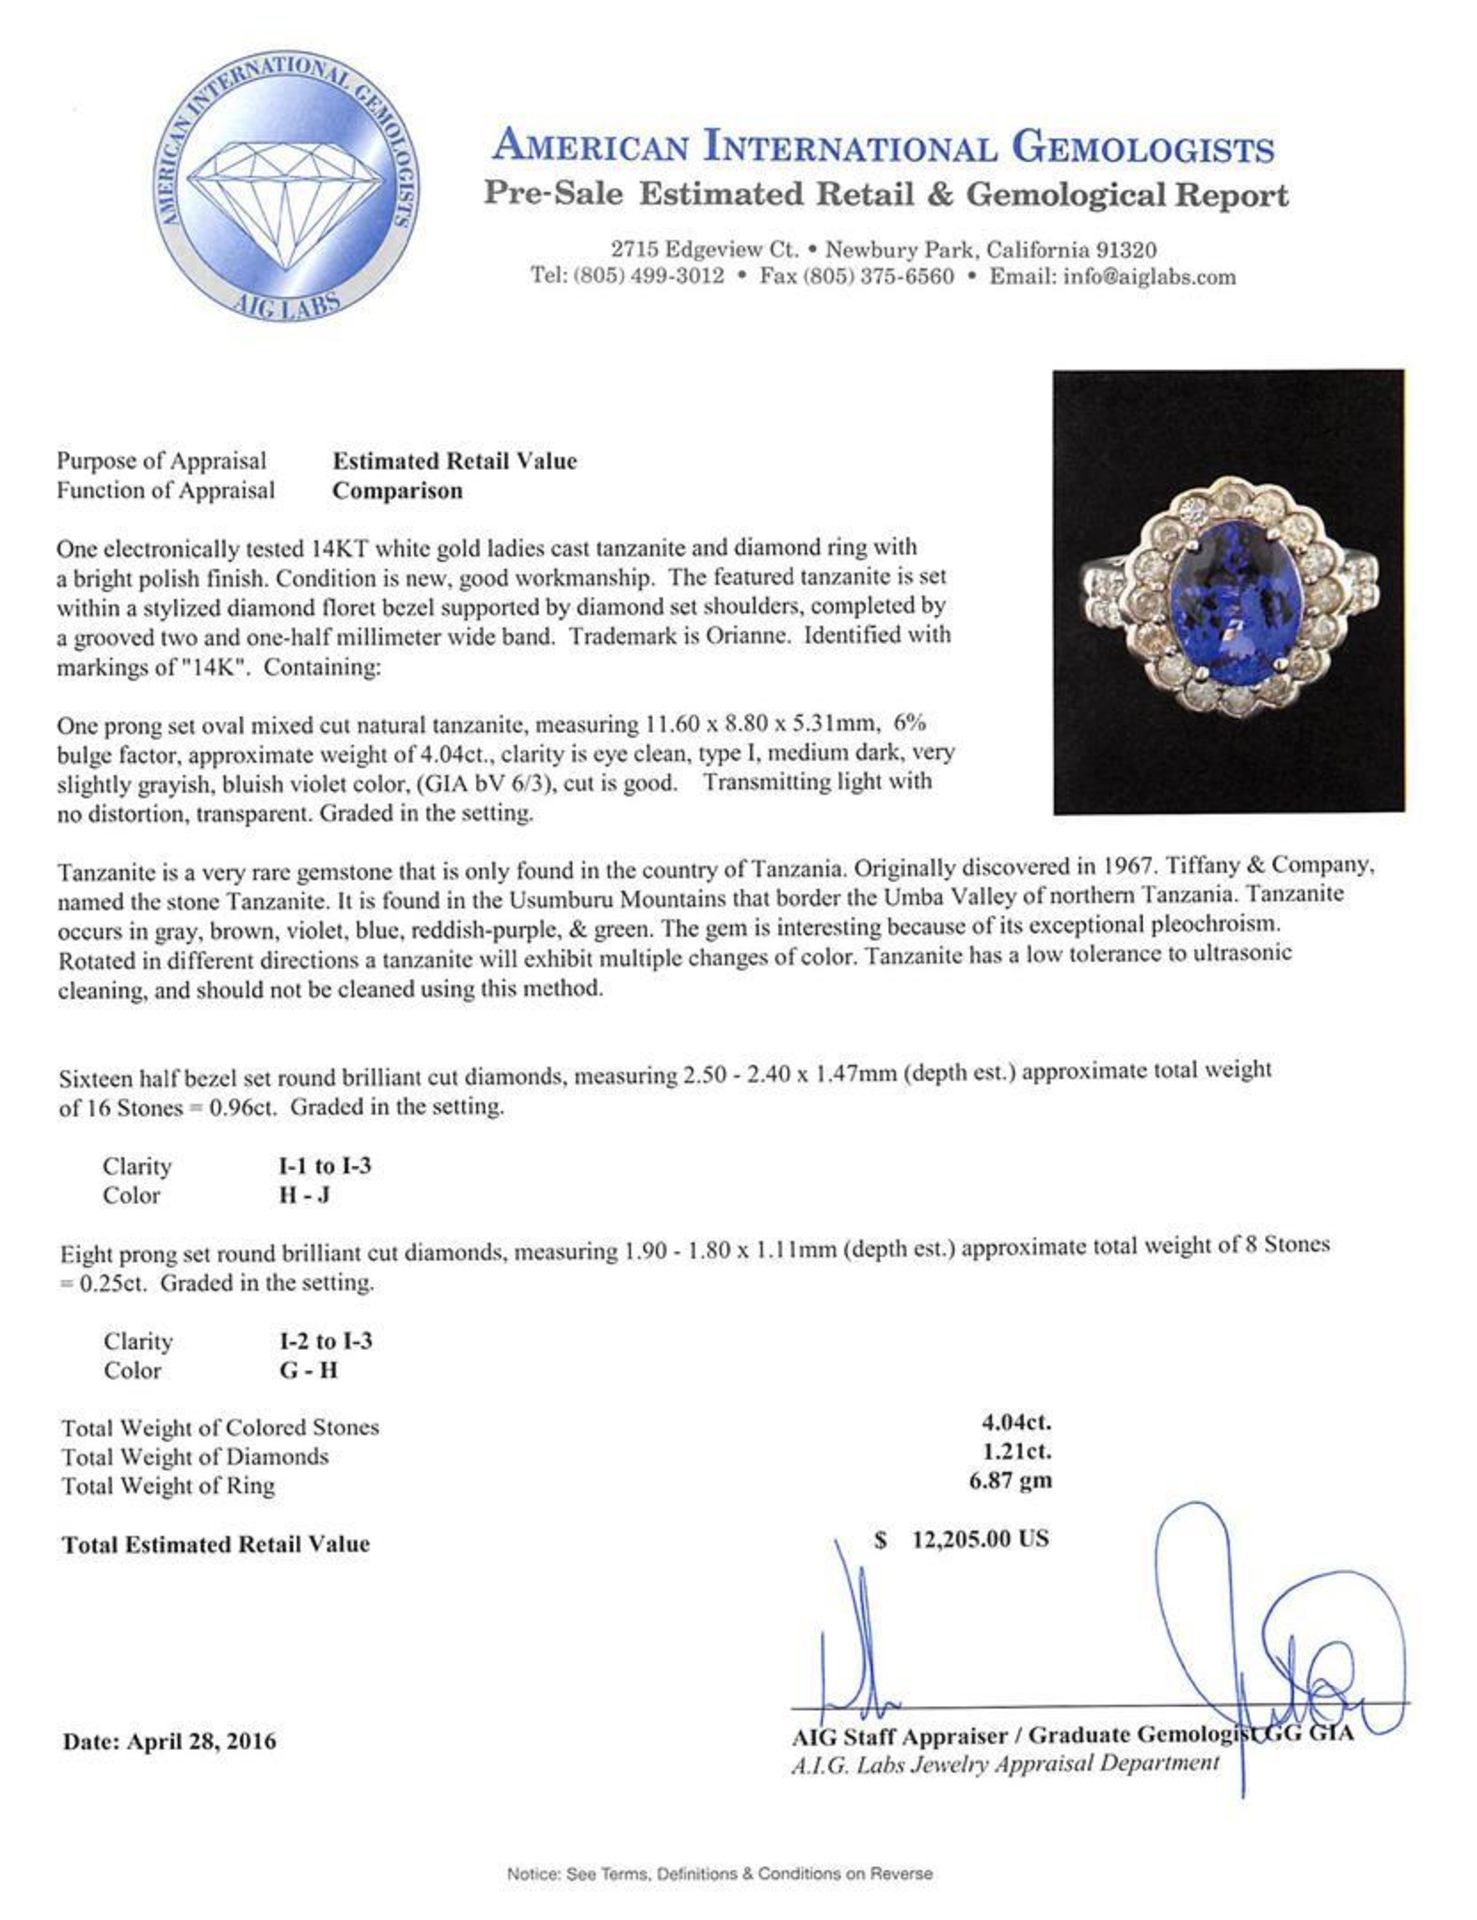 4.04 ctw Tanzanite and Diamond Ring - 14KT White Gold - Image 5 of 5